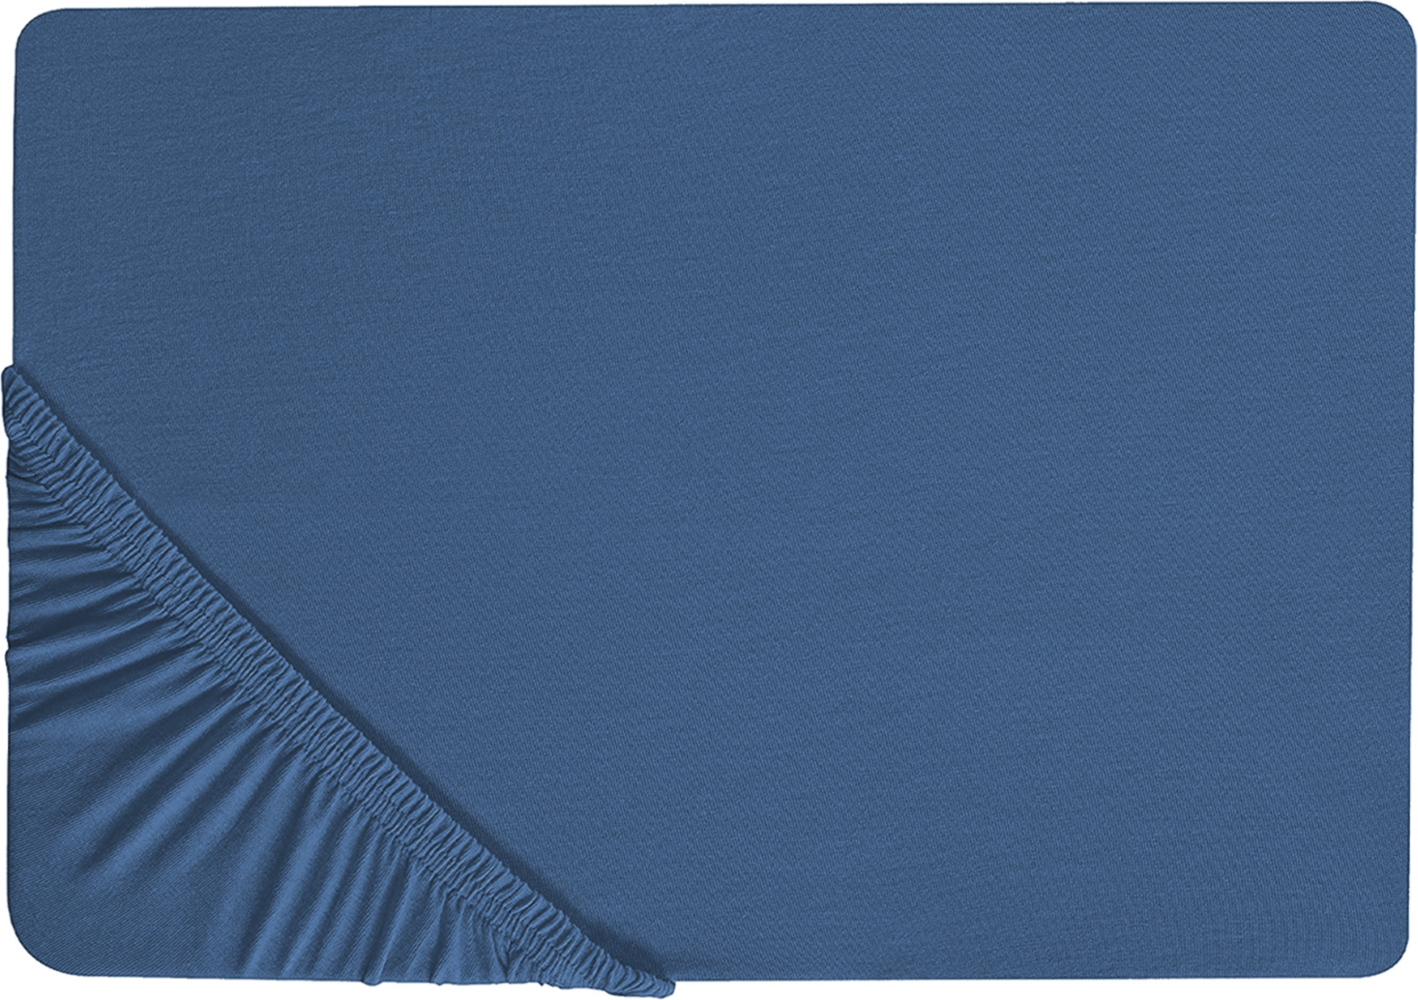 Spannbettlaken Baumwolle marineblau 90 x 200 cm JANBU Bild 1